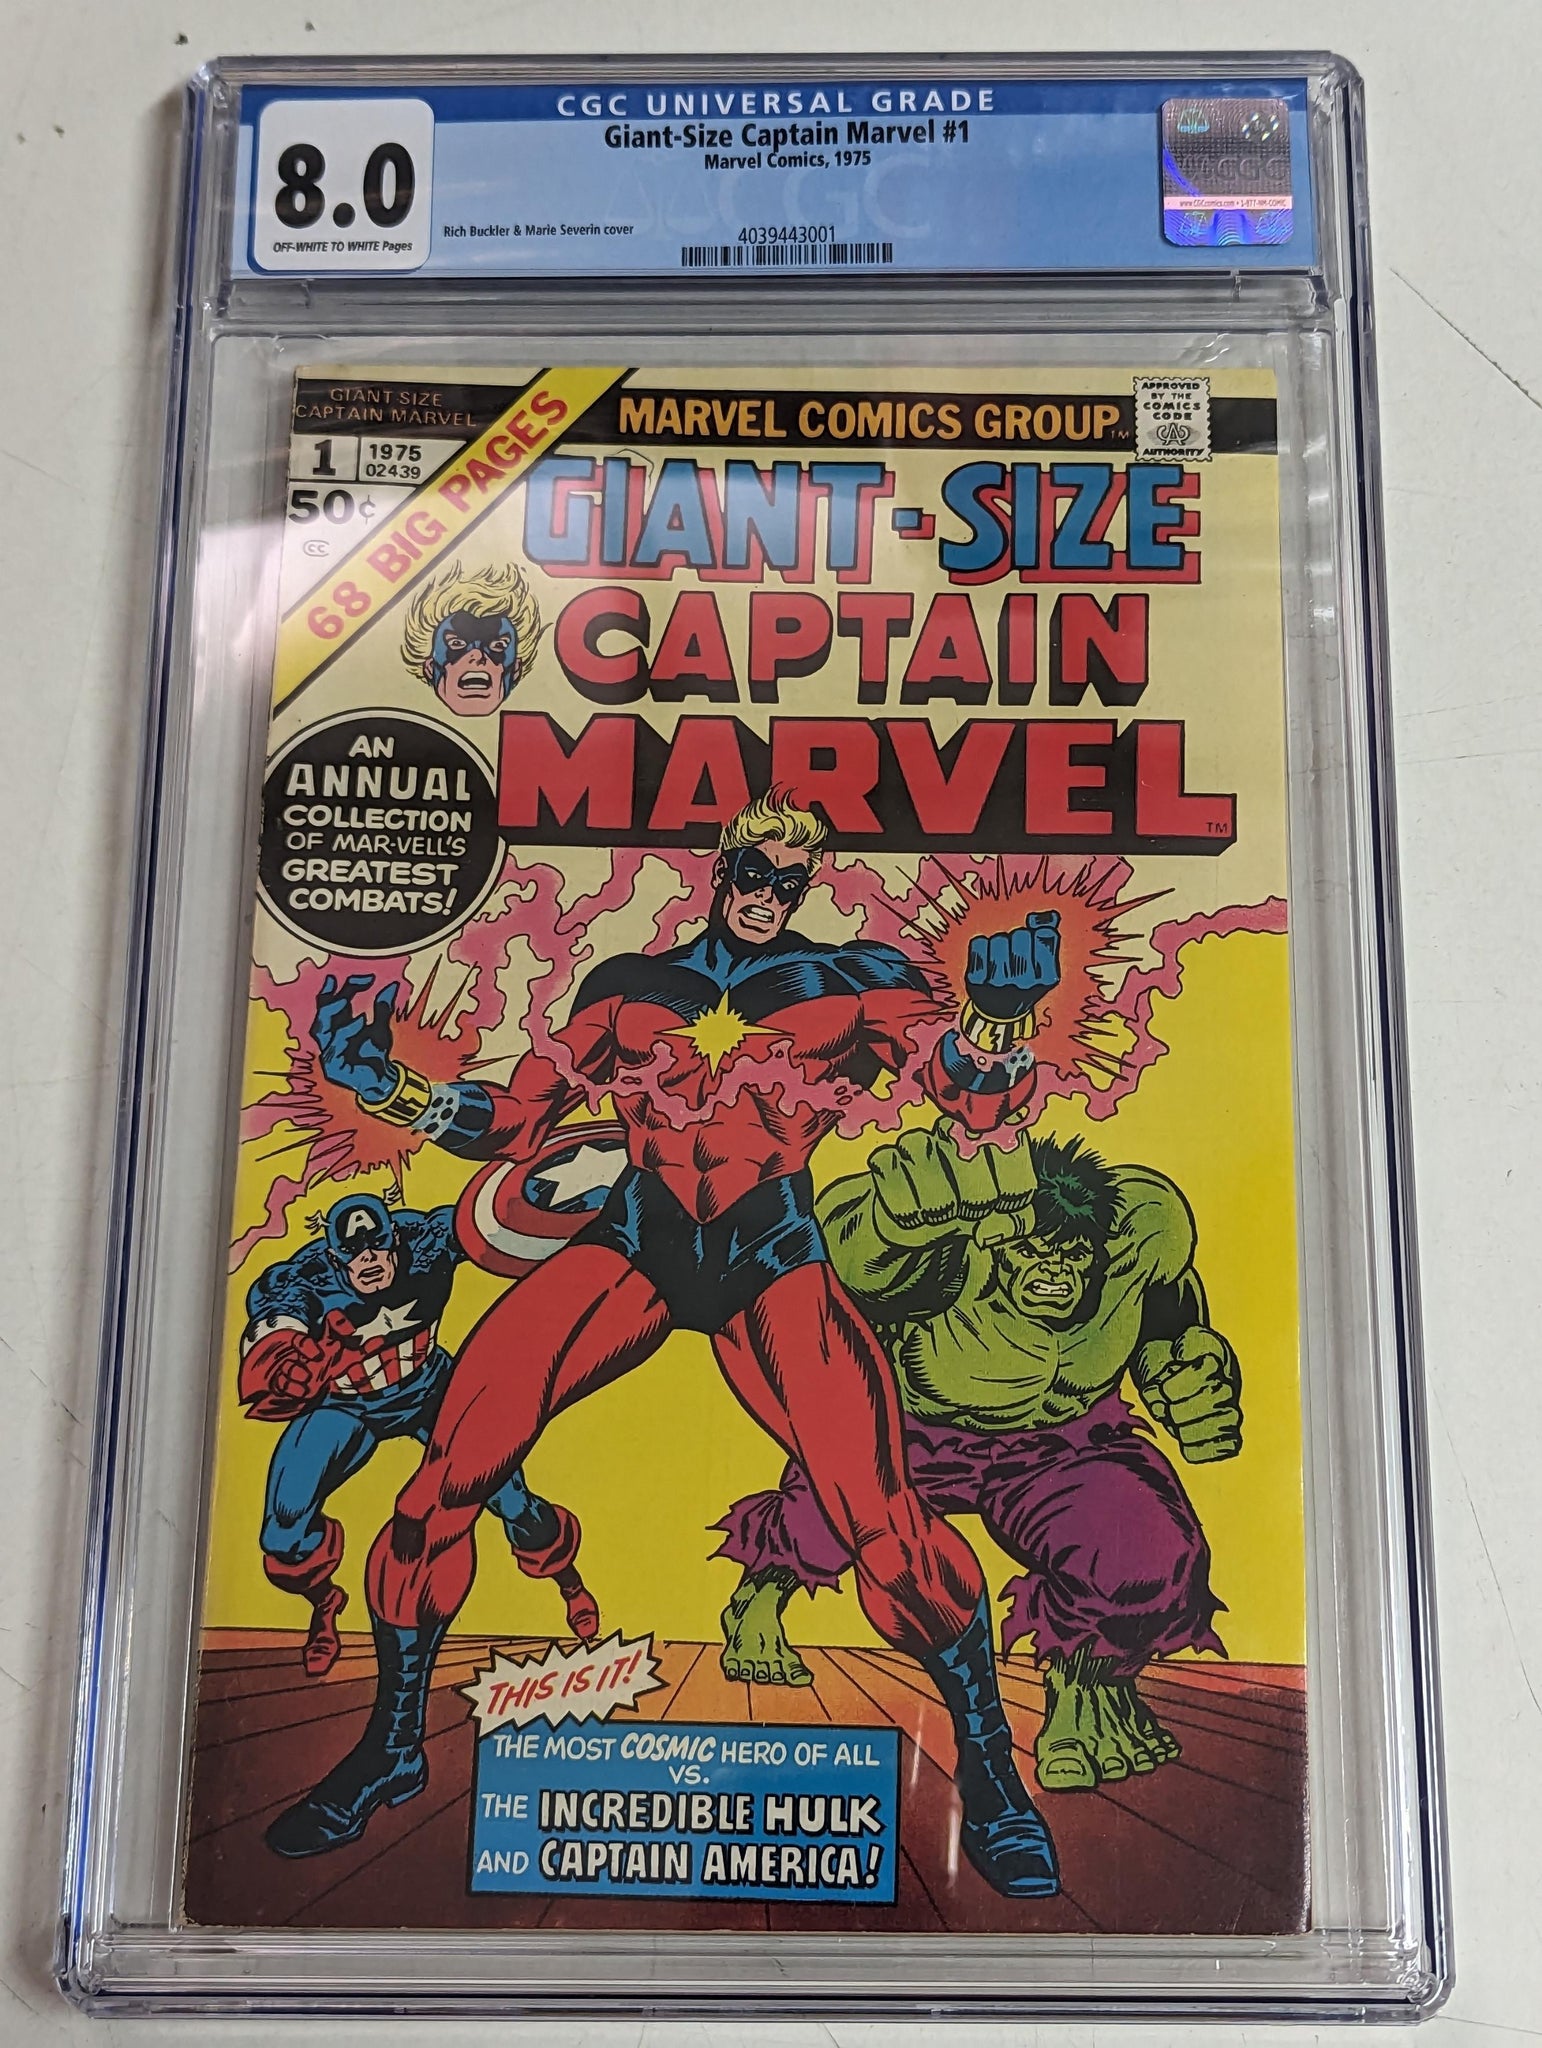 Giant-Size Captain Marvel #1 Certified Guaranty Company (CGC) Graded 8.0